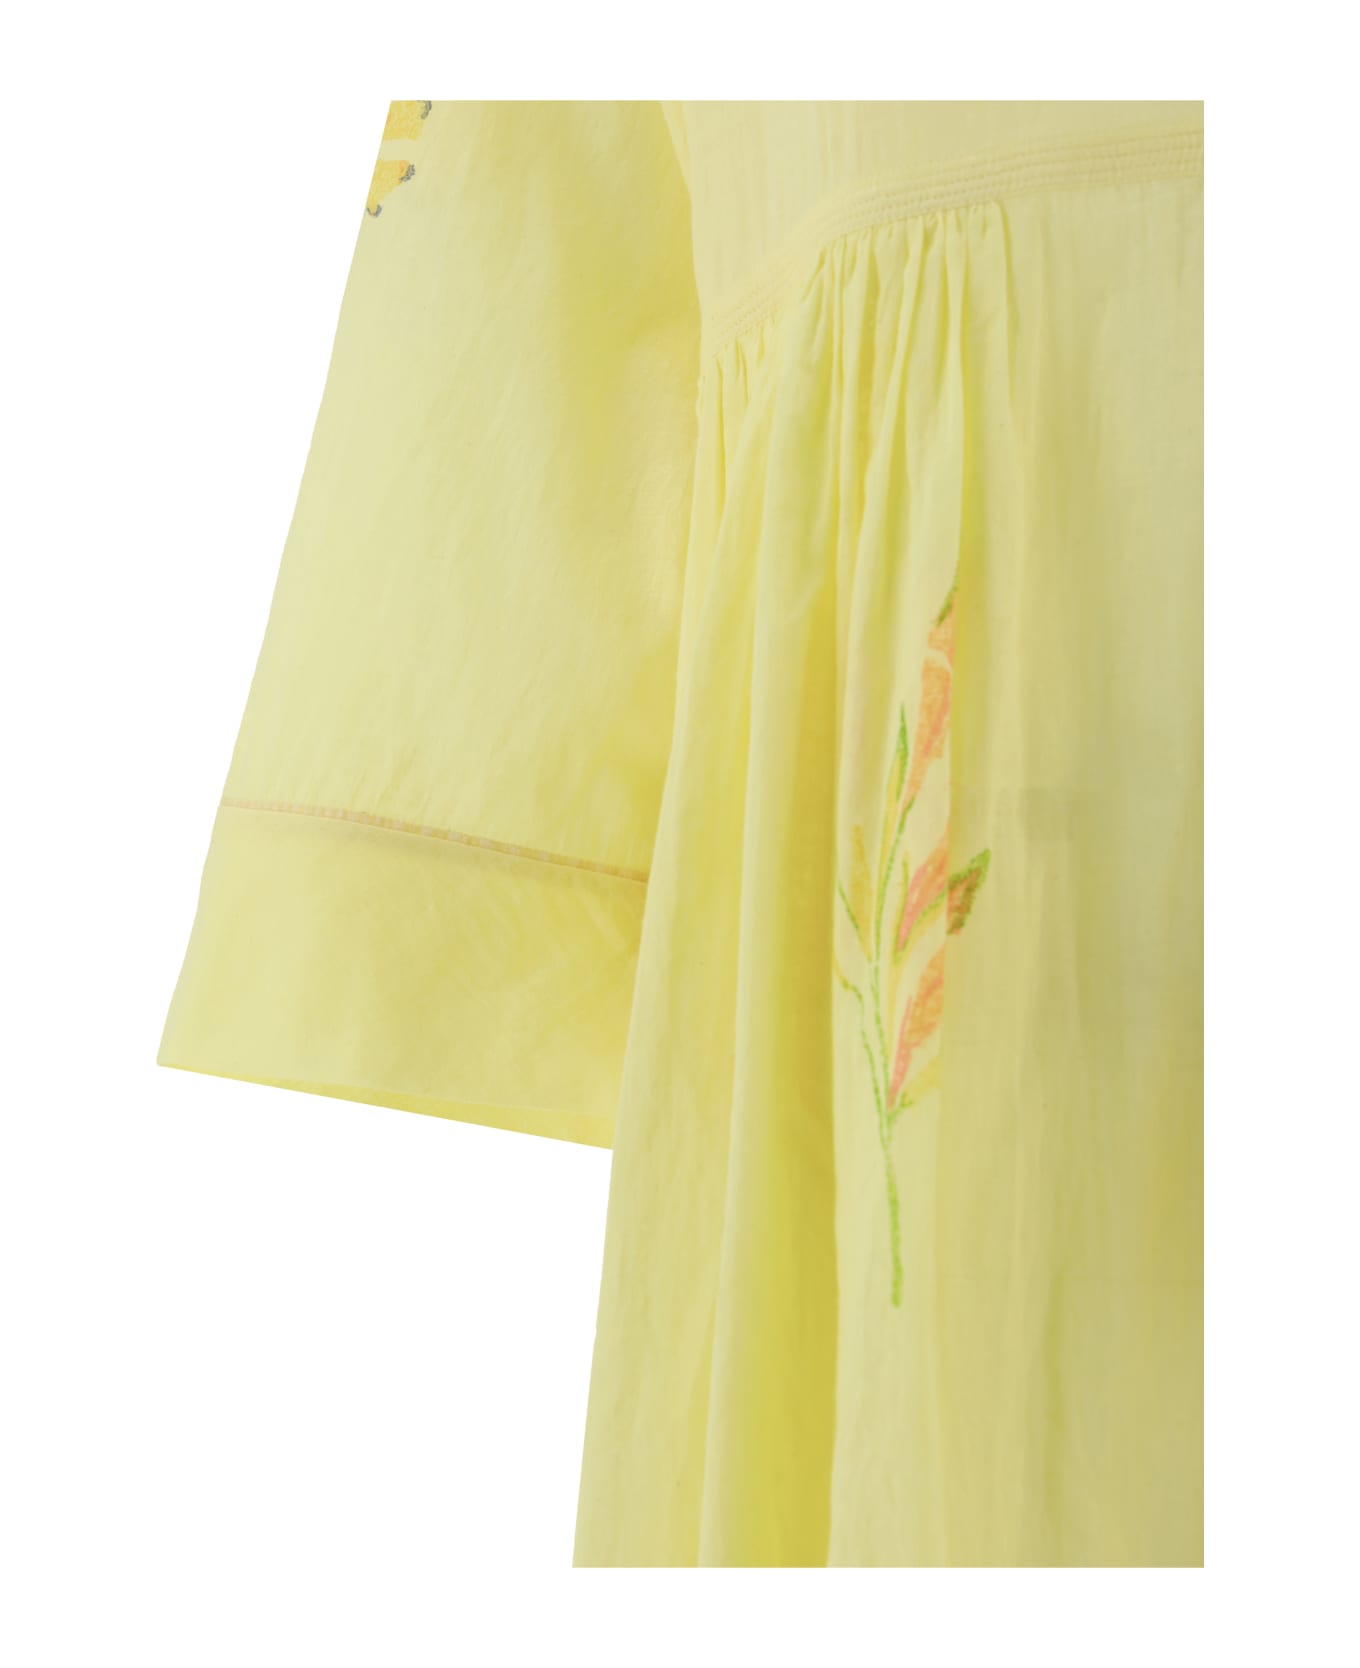 Eka Prion Chemisier Dress - Yellow